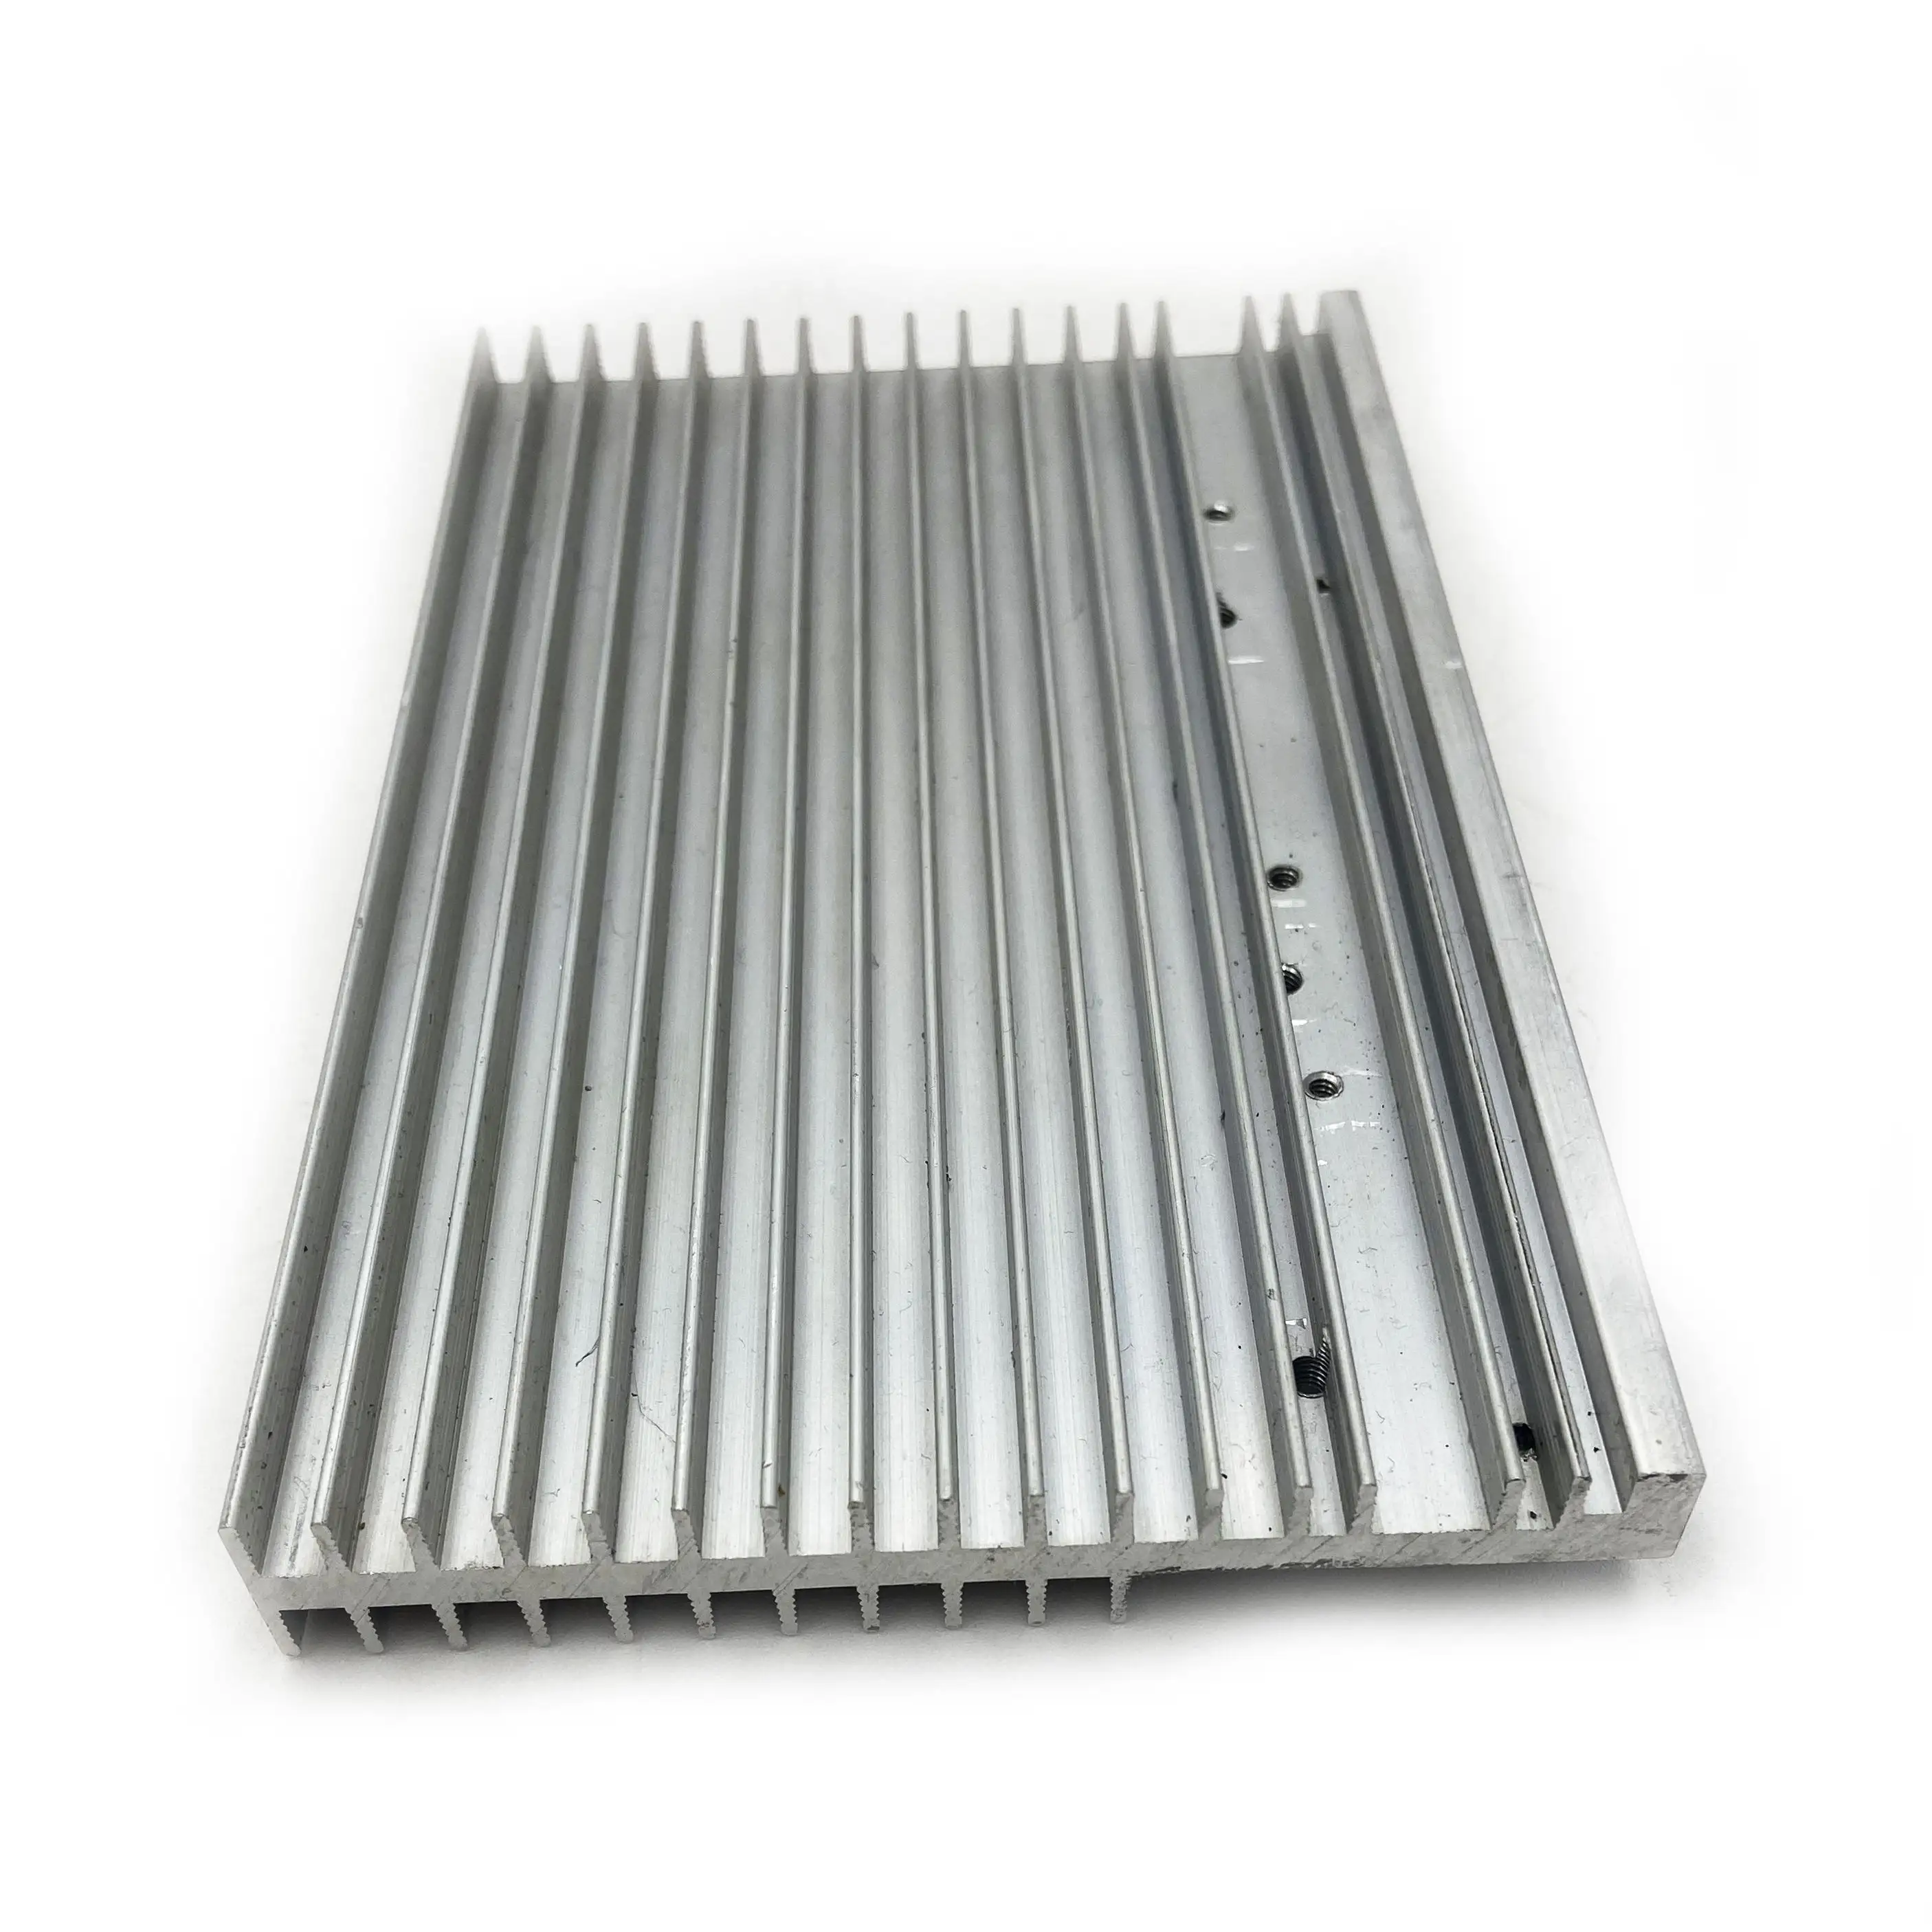 Custom Aluminum Heatsink Profile High Density Fin Extruded Heat Sink Profile with Anodized